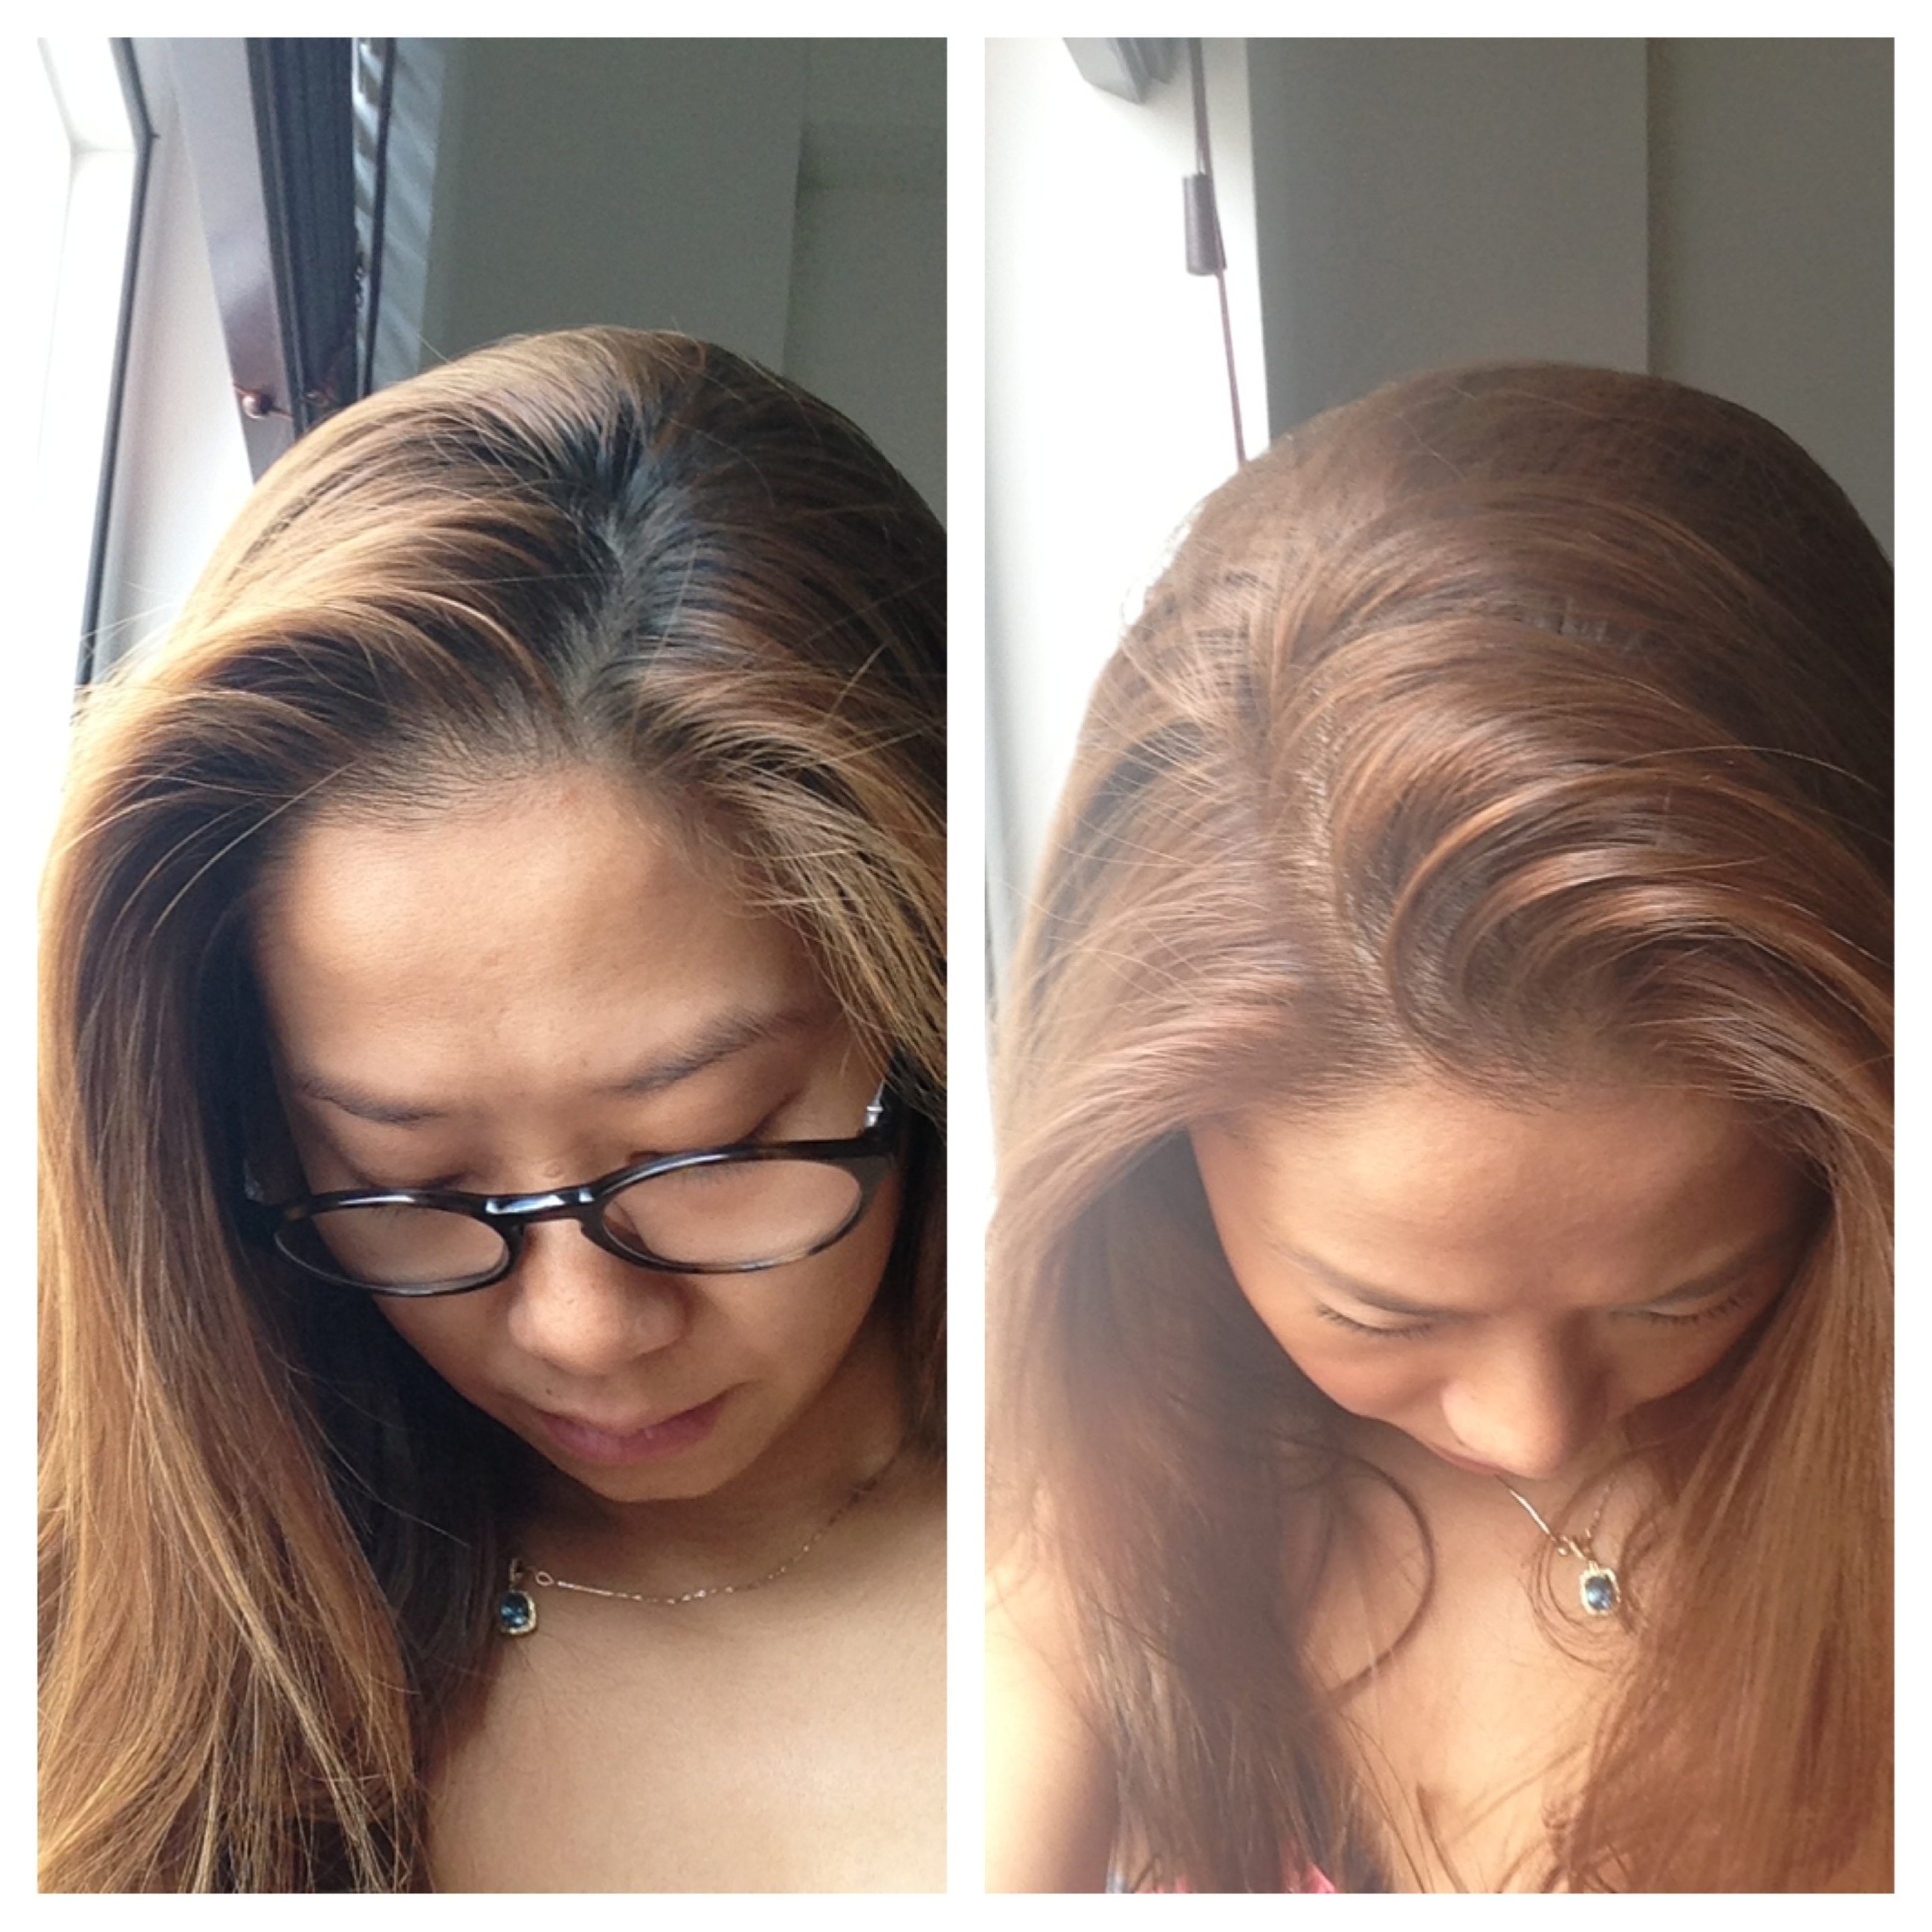 Kalamakeup – Make up & Hair Styling Artist – Hong Kong 30 minutes to dye  your hair at home - Kalamakeup - Make up & Hair Styling Artist - Hong Kong